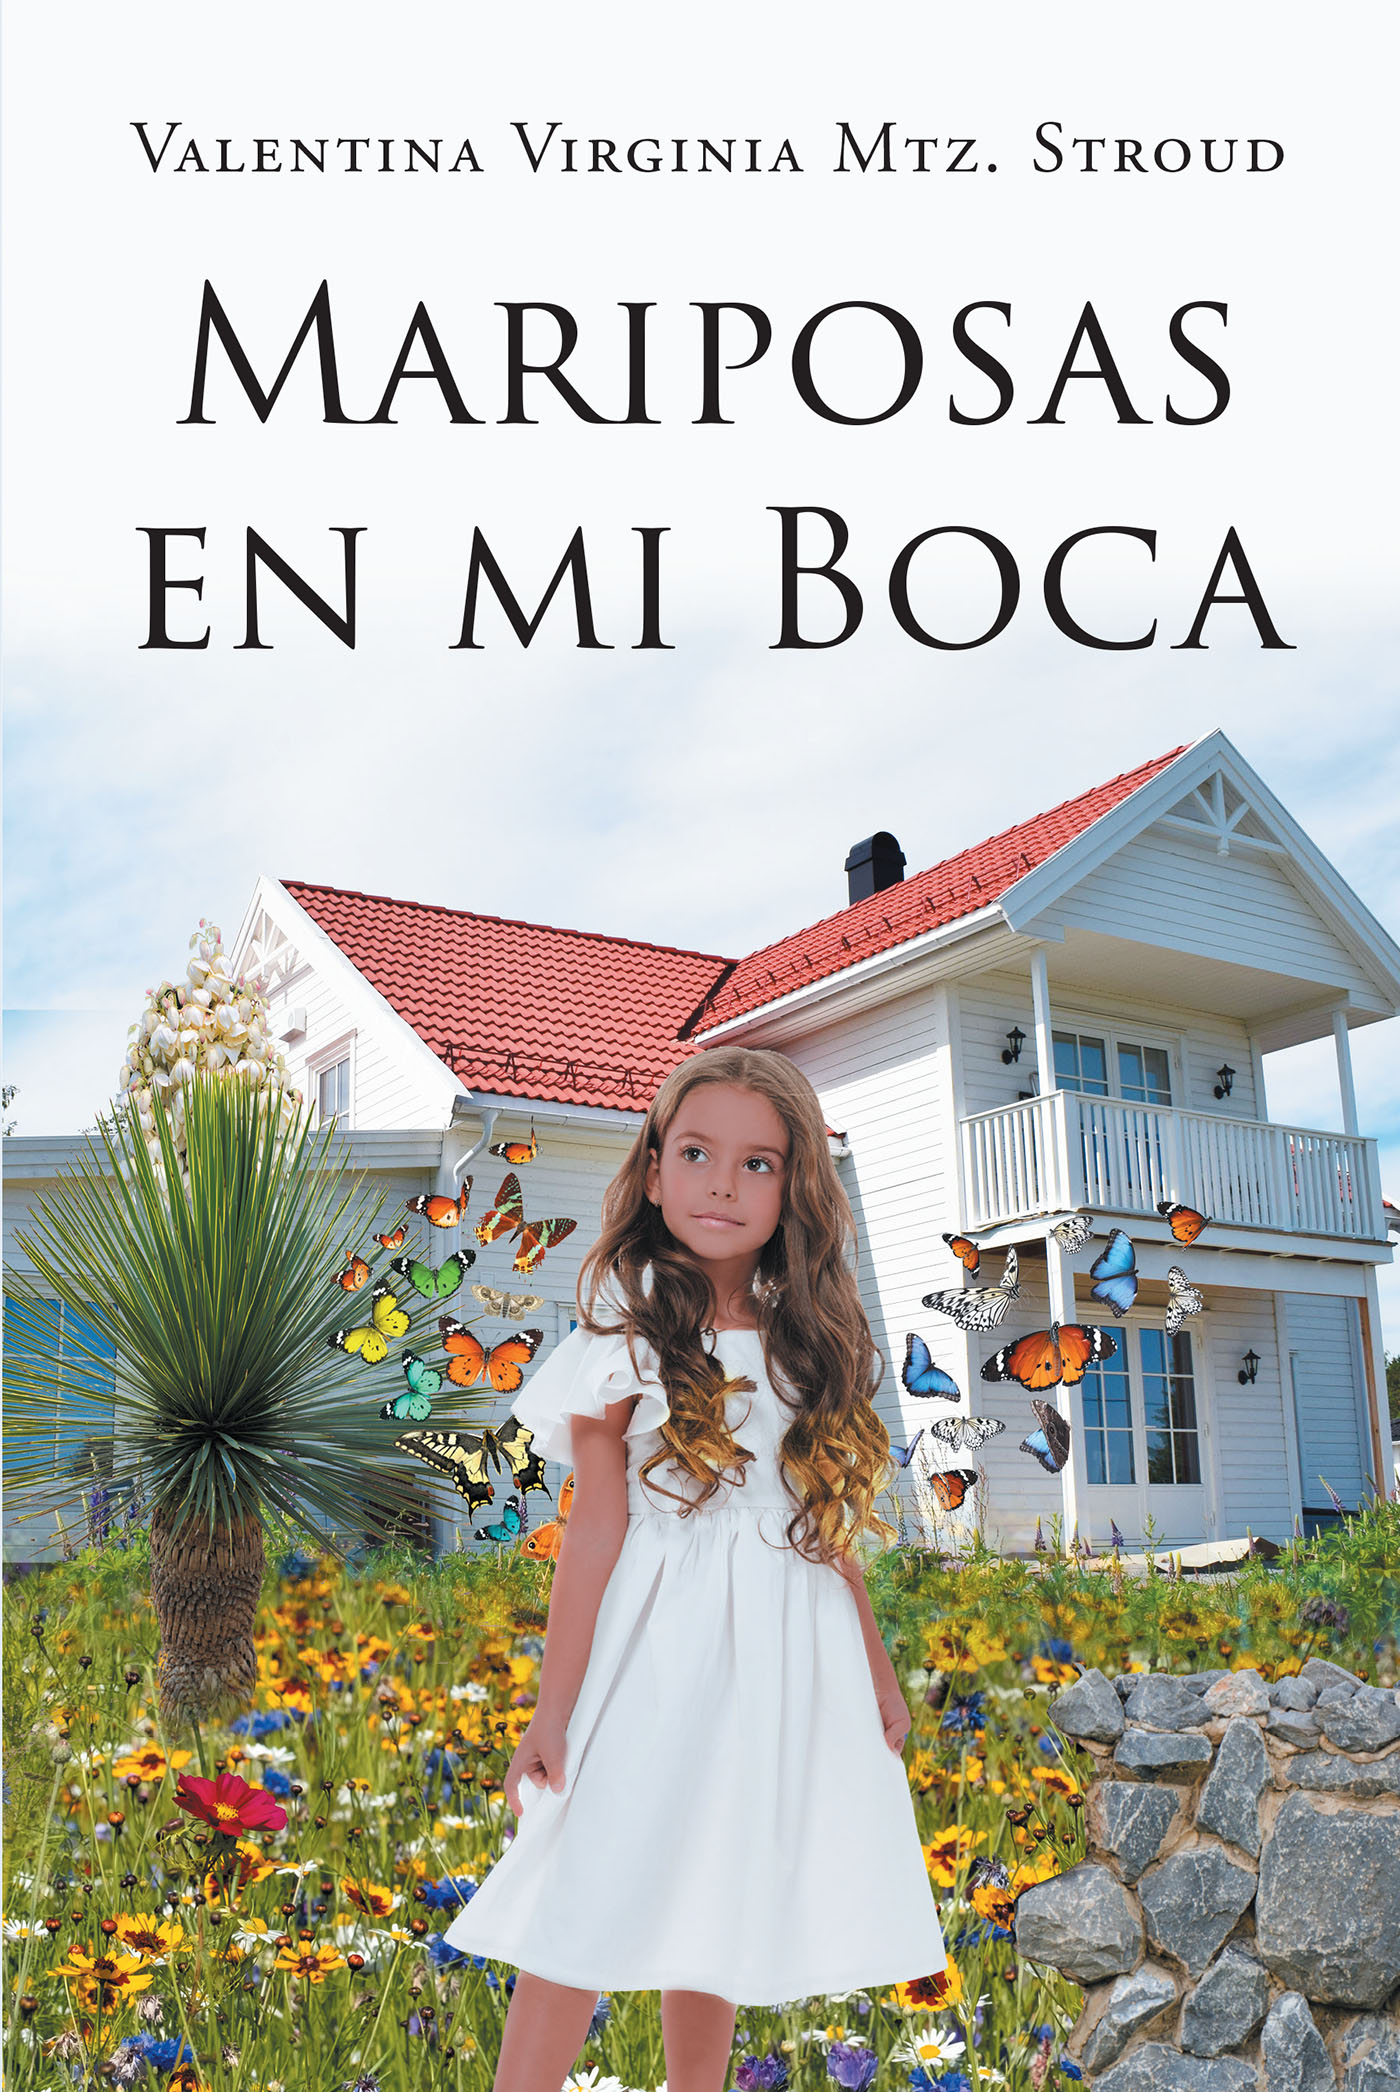 Author Valentina Virginia Mtz. Stroud’s New Book, “Mariposas en mi boca,” is an Emotional Ride Centered Around One Girl's Struggles to Return to Her Beloved Grandparents